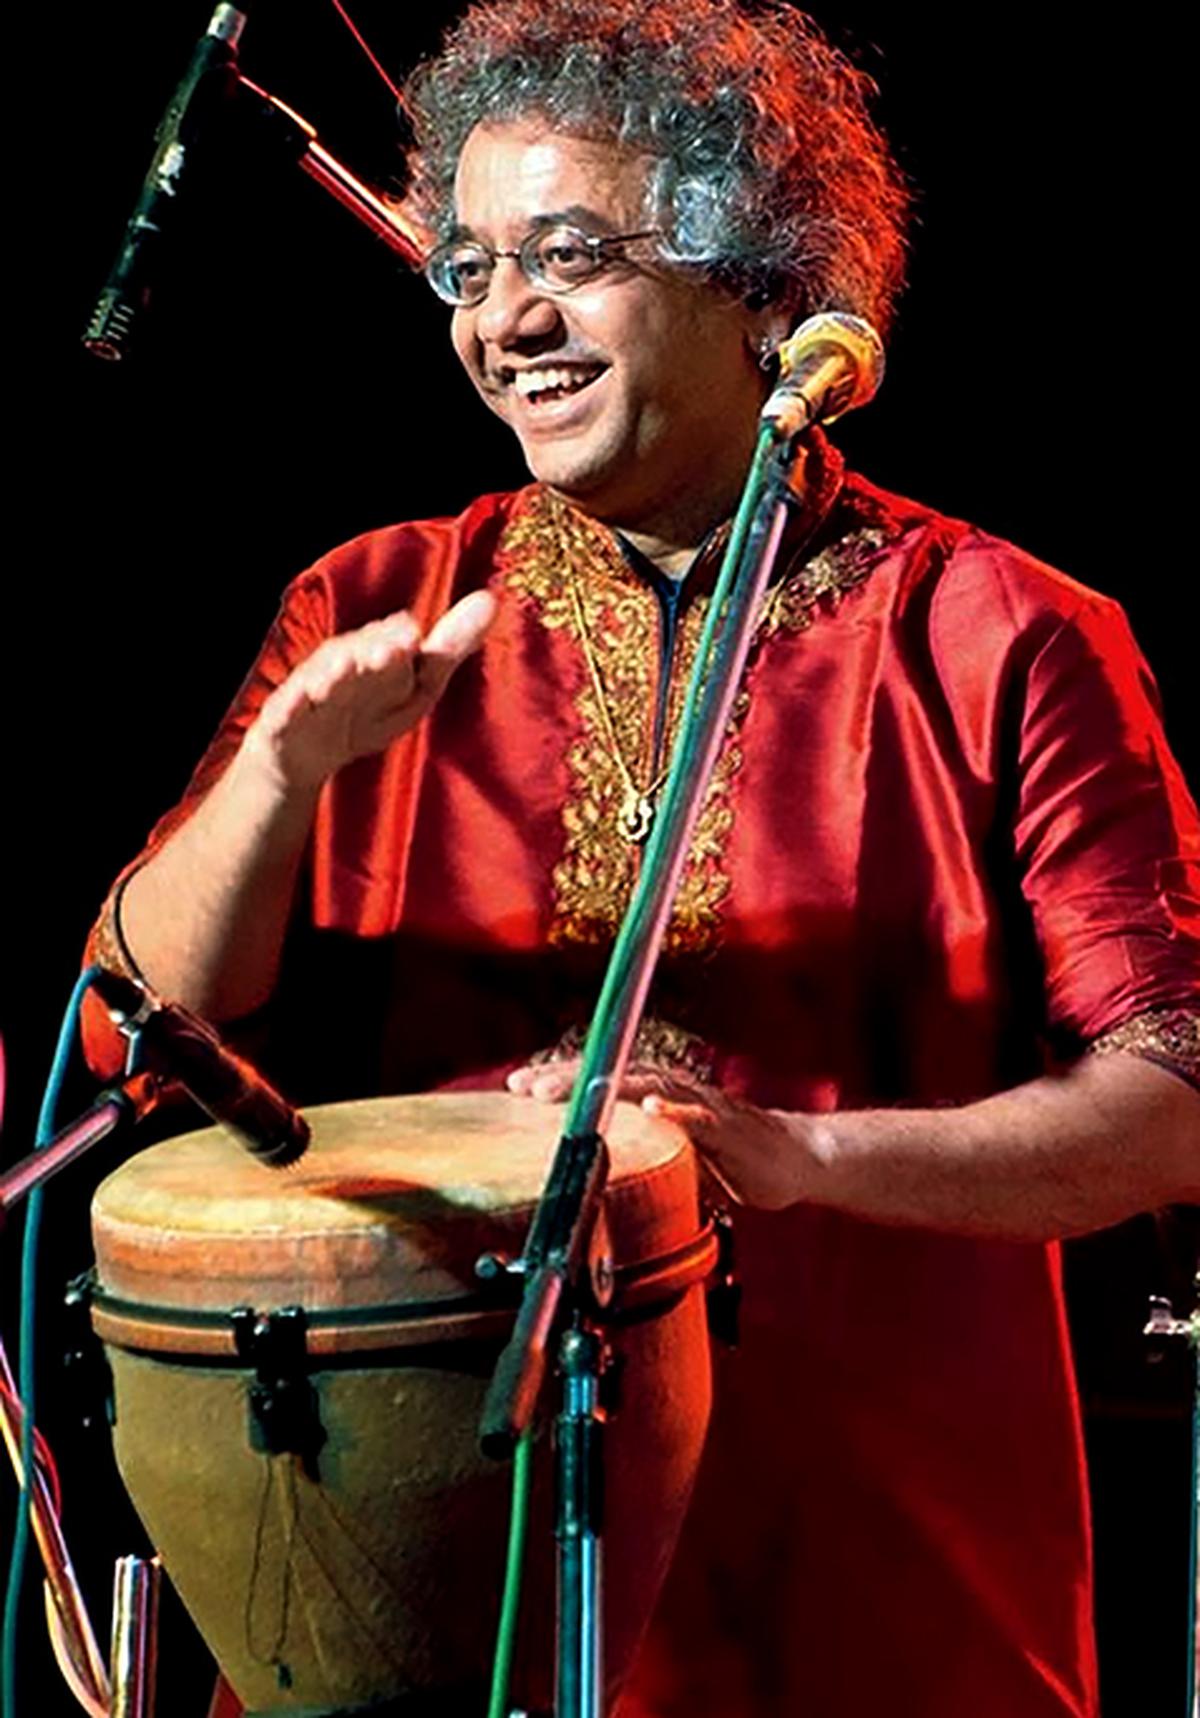 Taufiq Qureshi playing the djembe